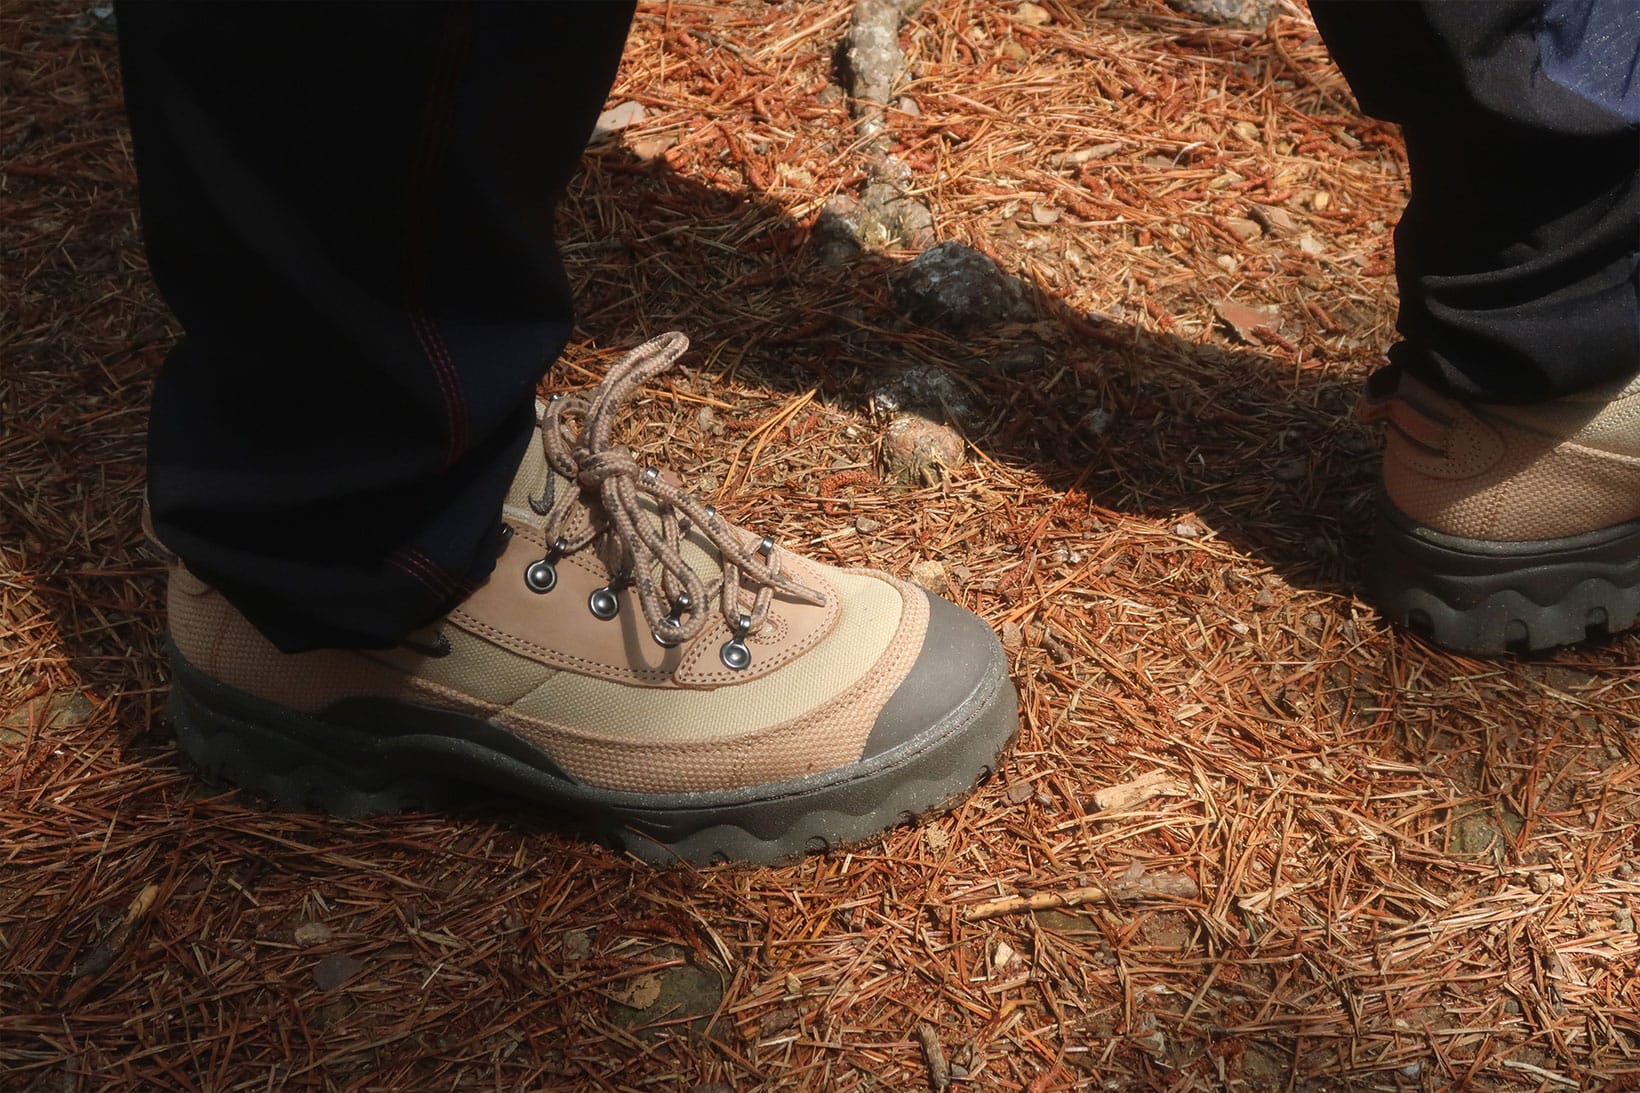 Nike Lahar Low "Grain" Womens Hiking Shoe Review | HYPEBAE